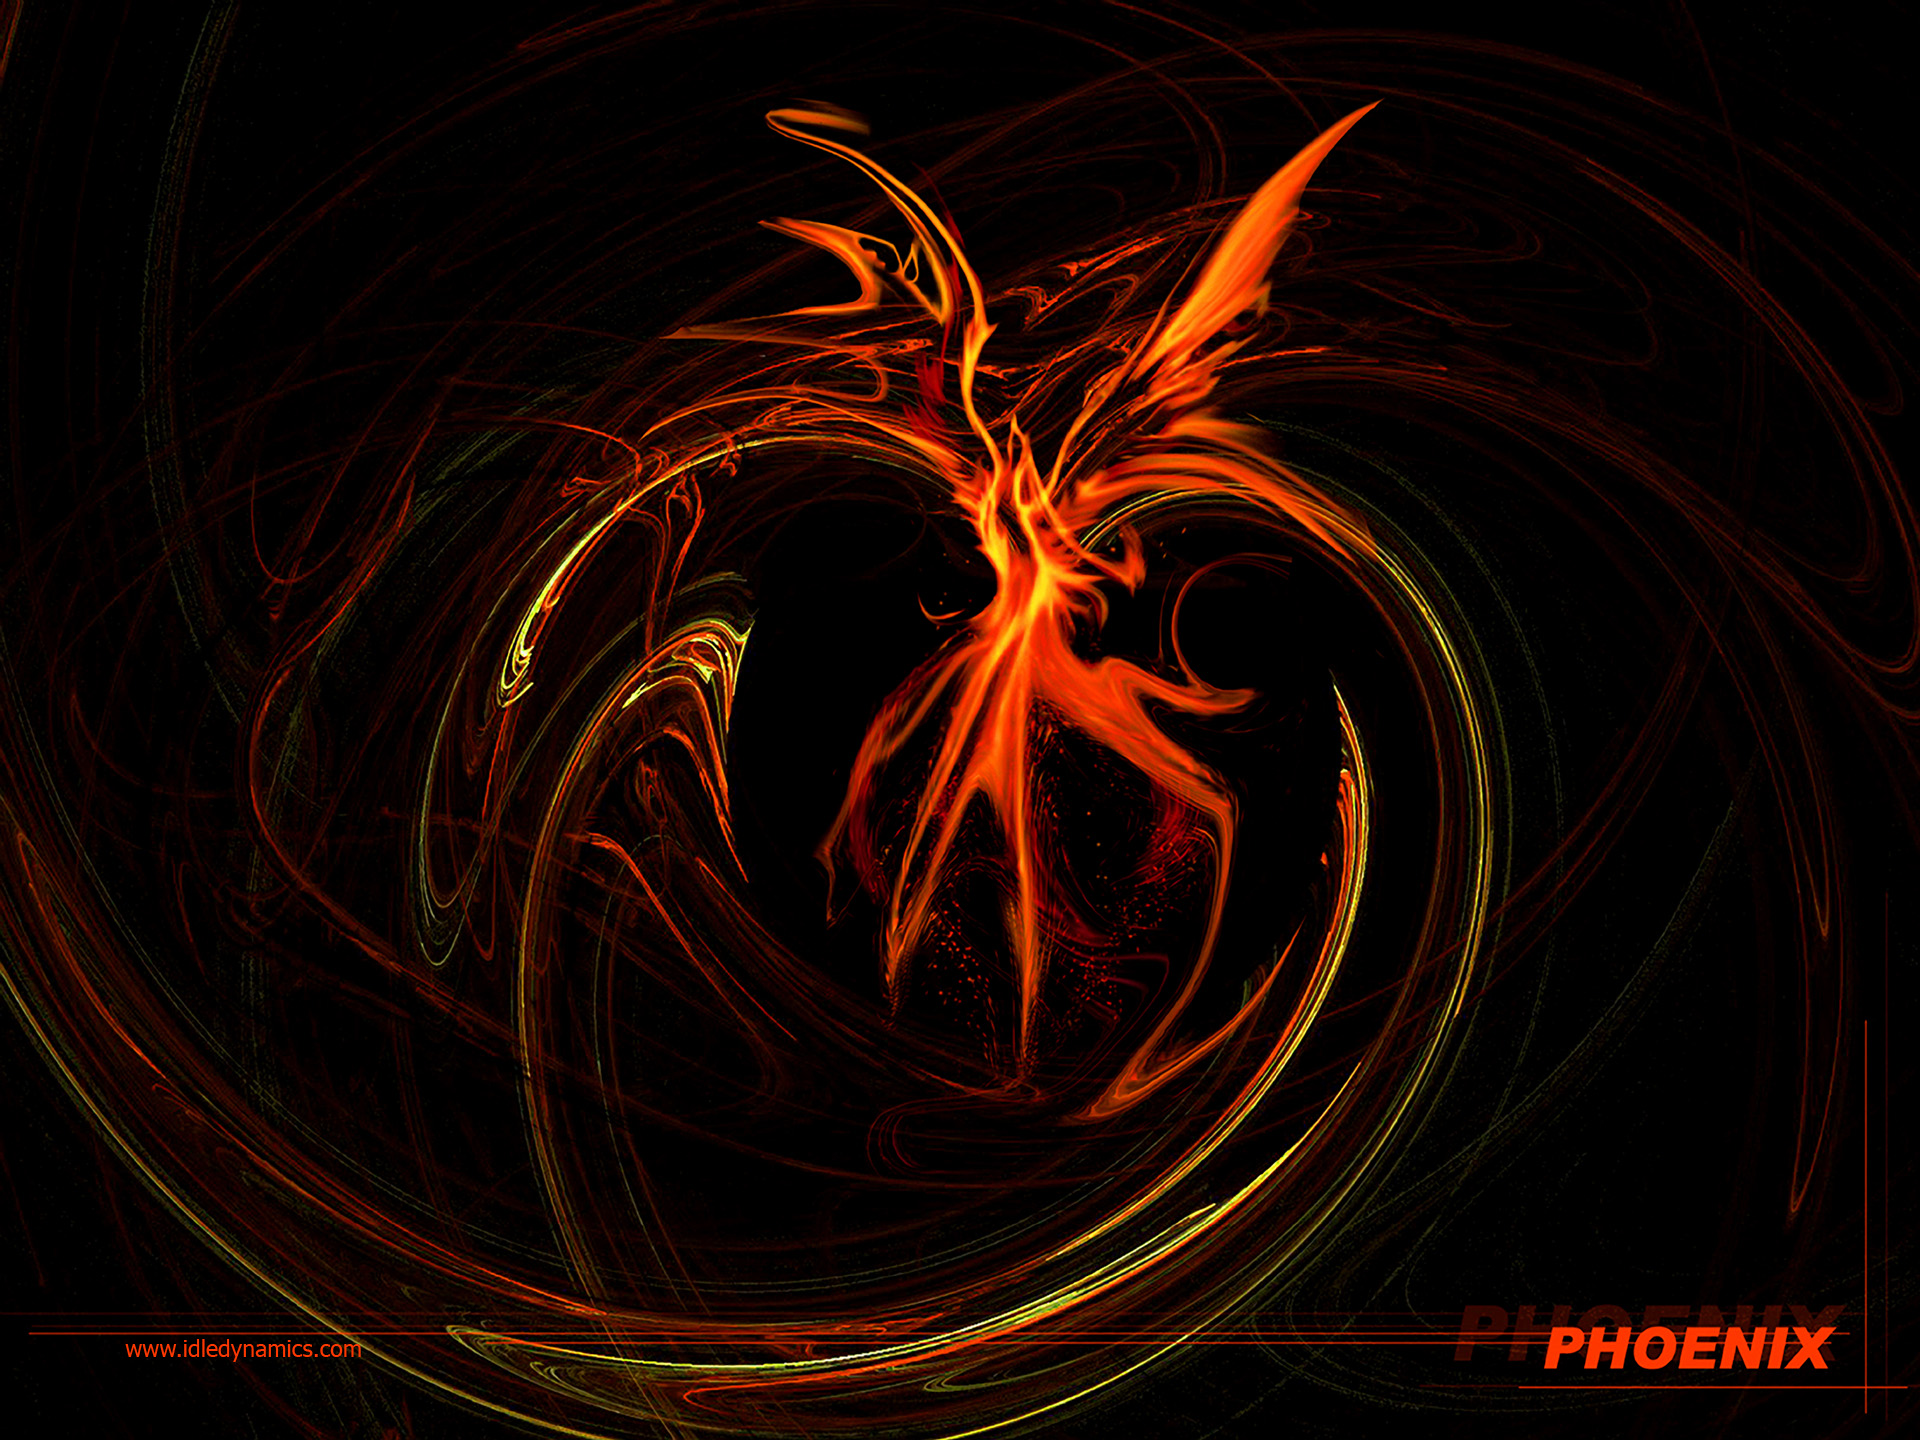 44+] Phoenix Wallpaper HD - WallpaperSafari